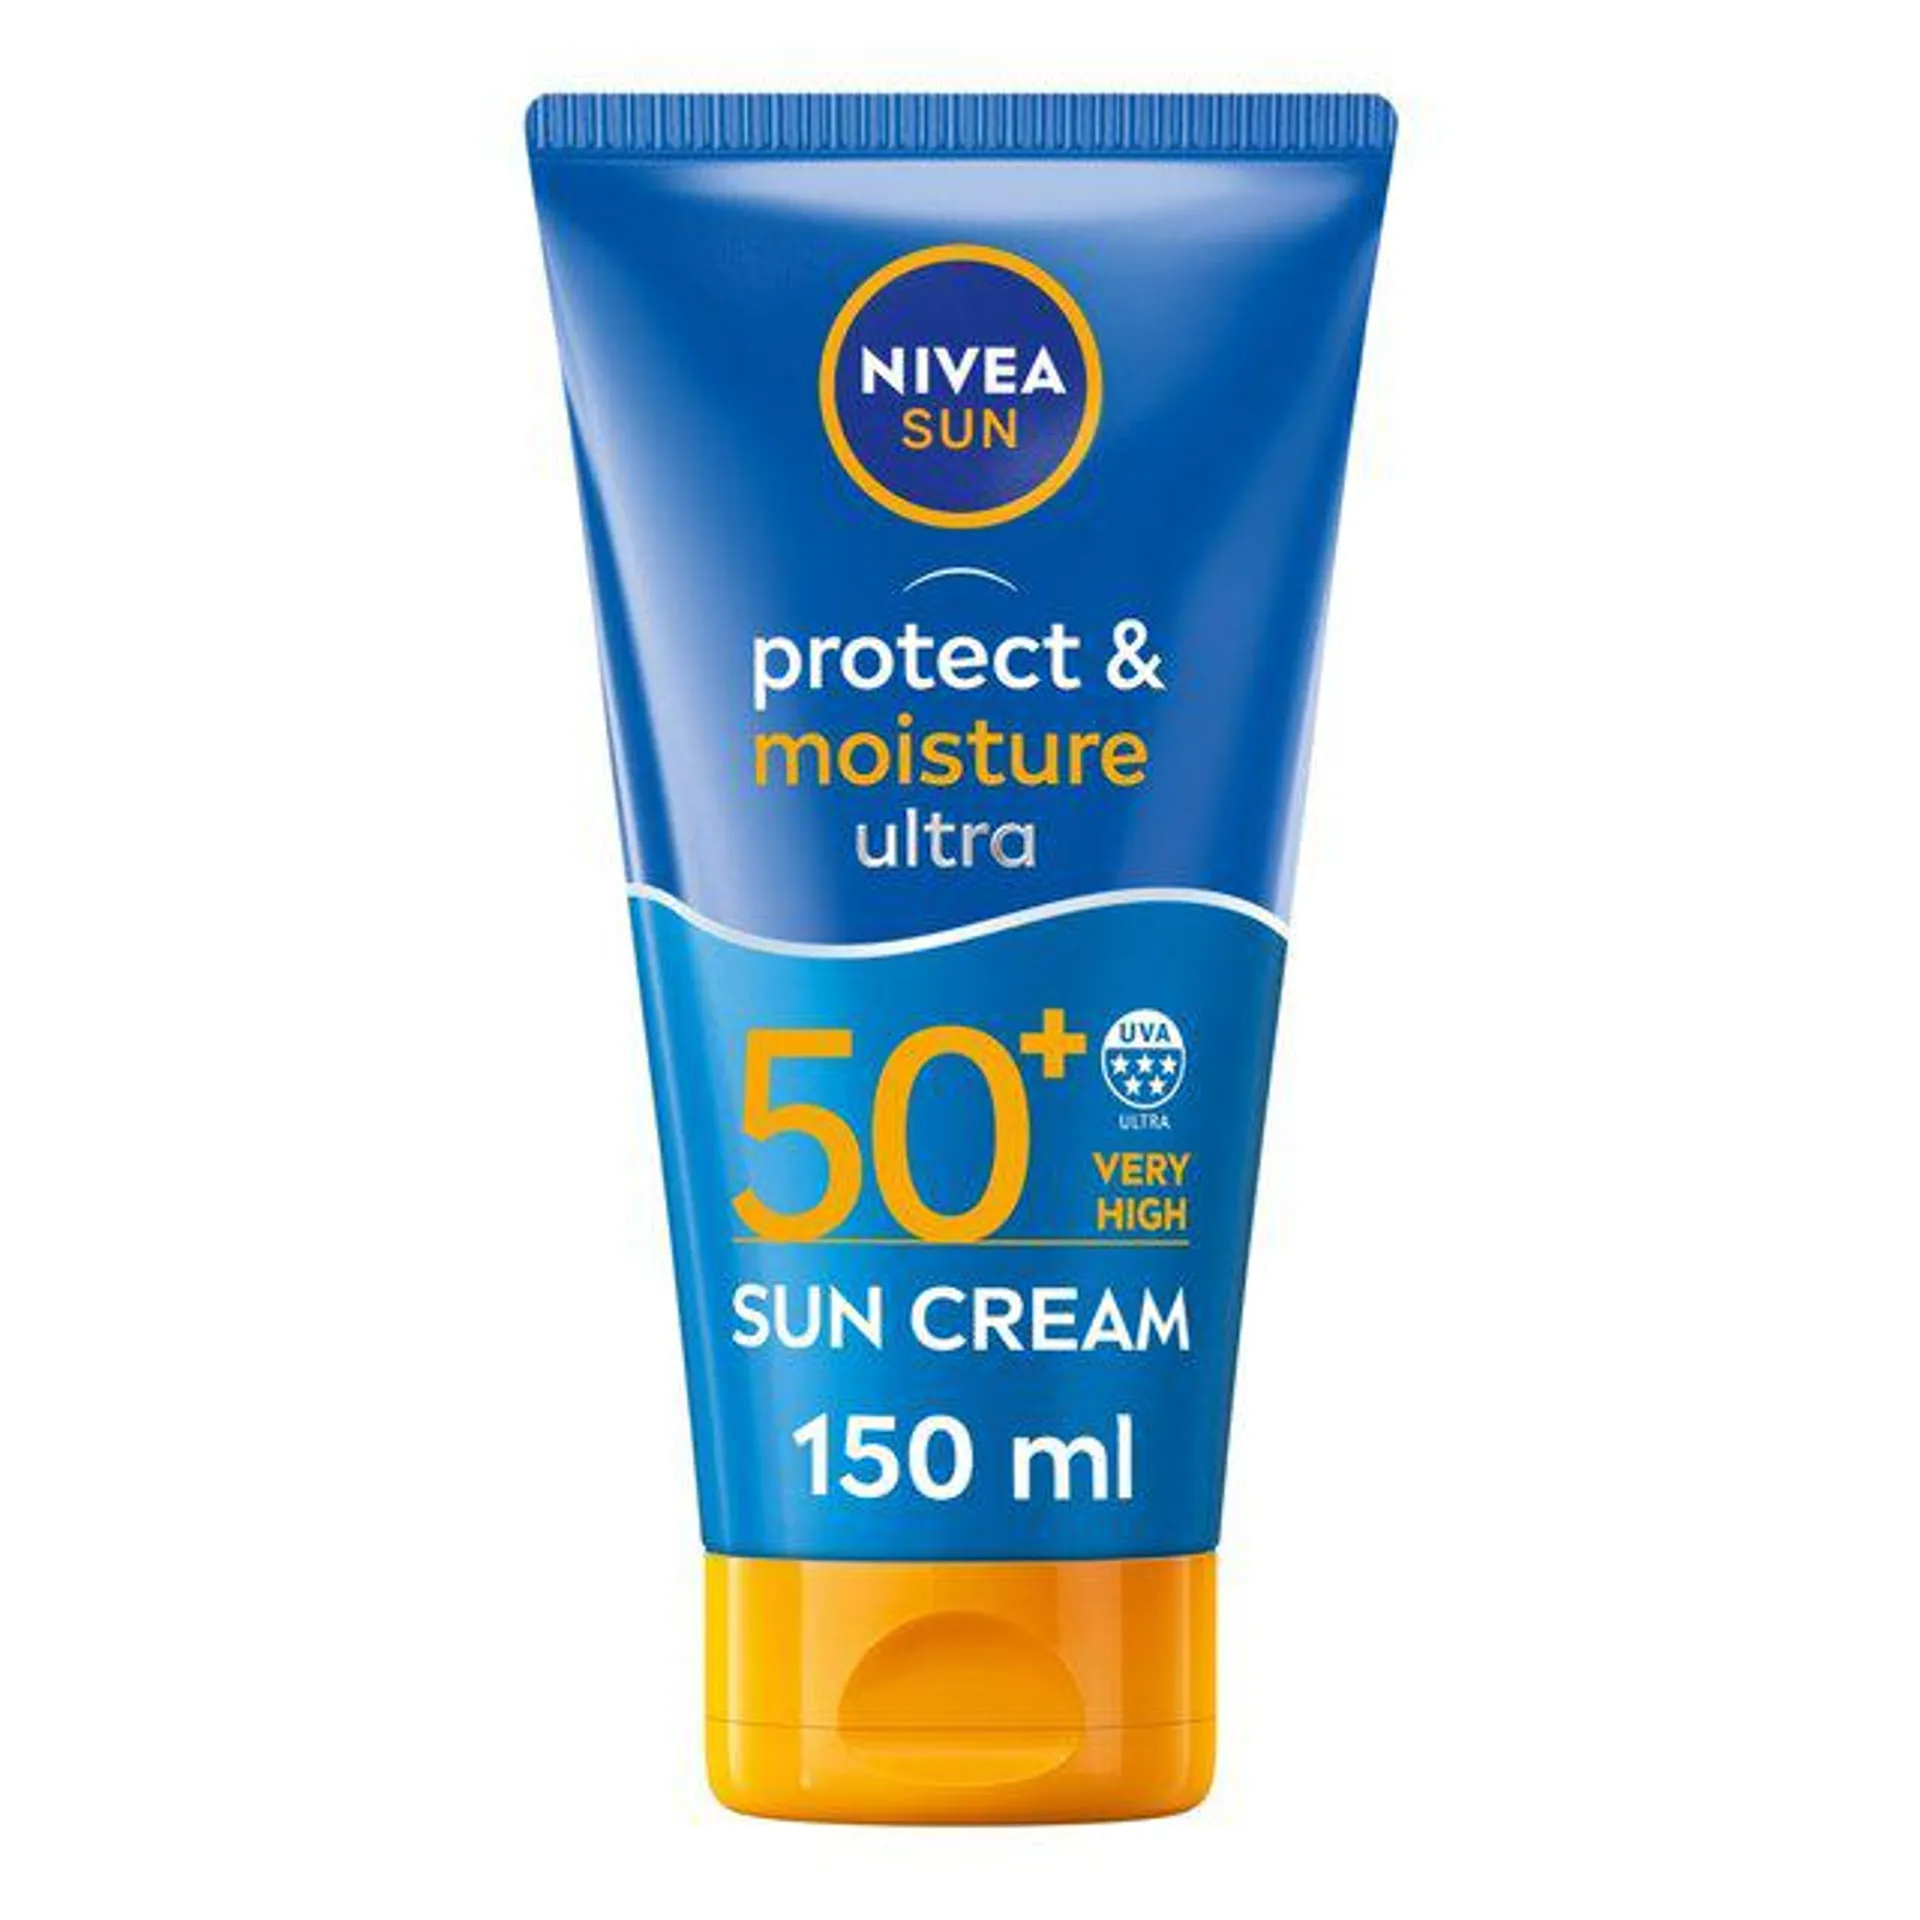 NIVEA SUN Protect & Moisture Ultra SPF 50+ Sun Cream 150ml